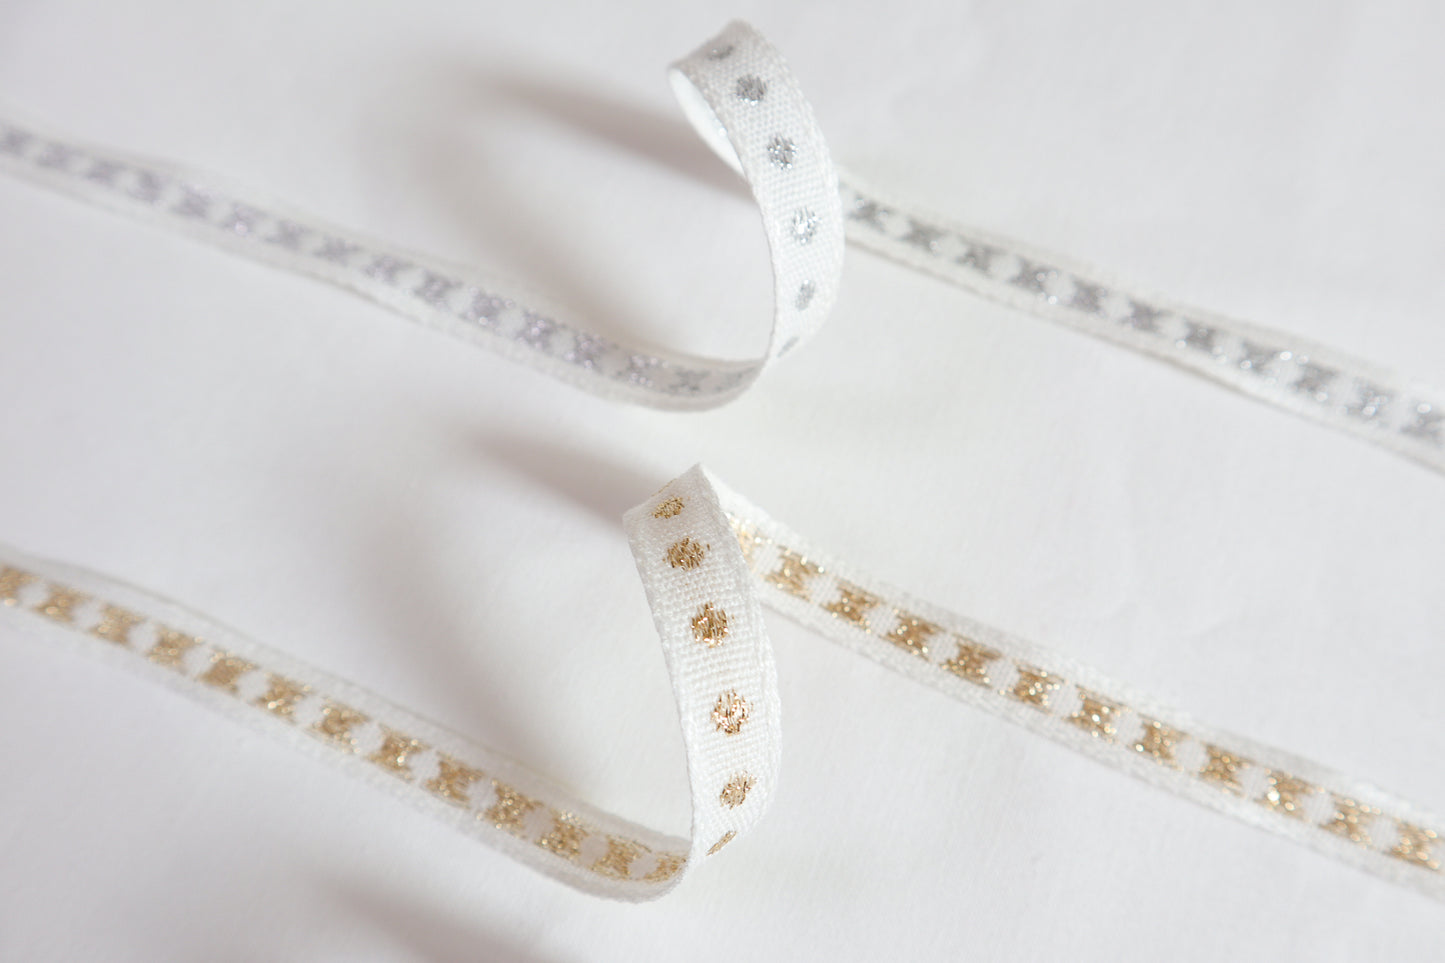 10mm metallic polka dots ribbon/ tape in washed linen